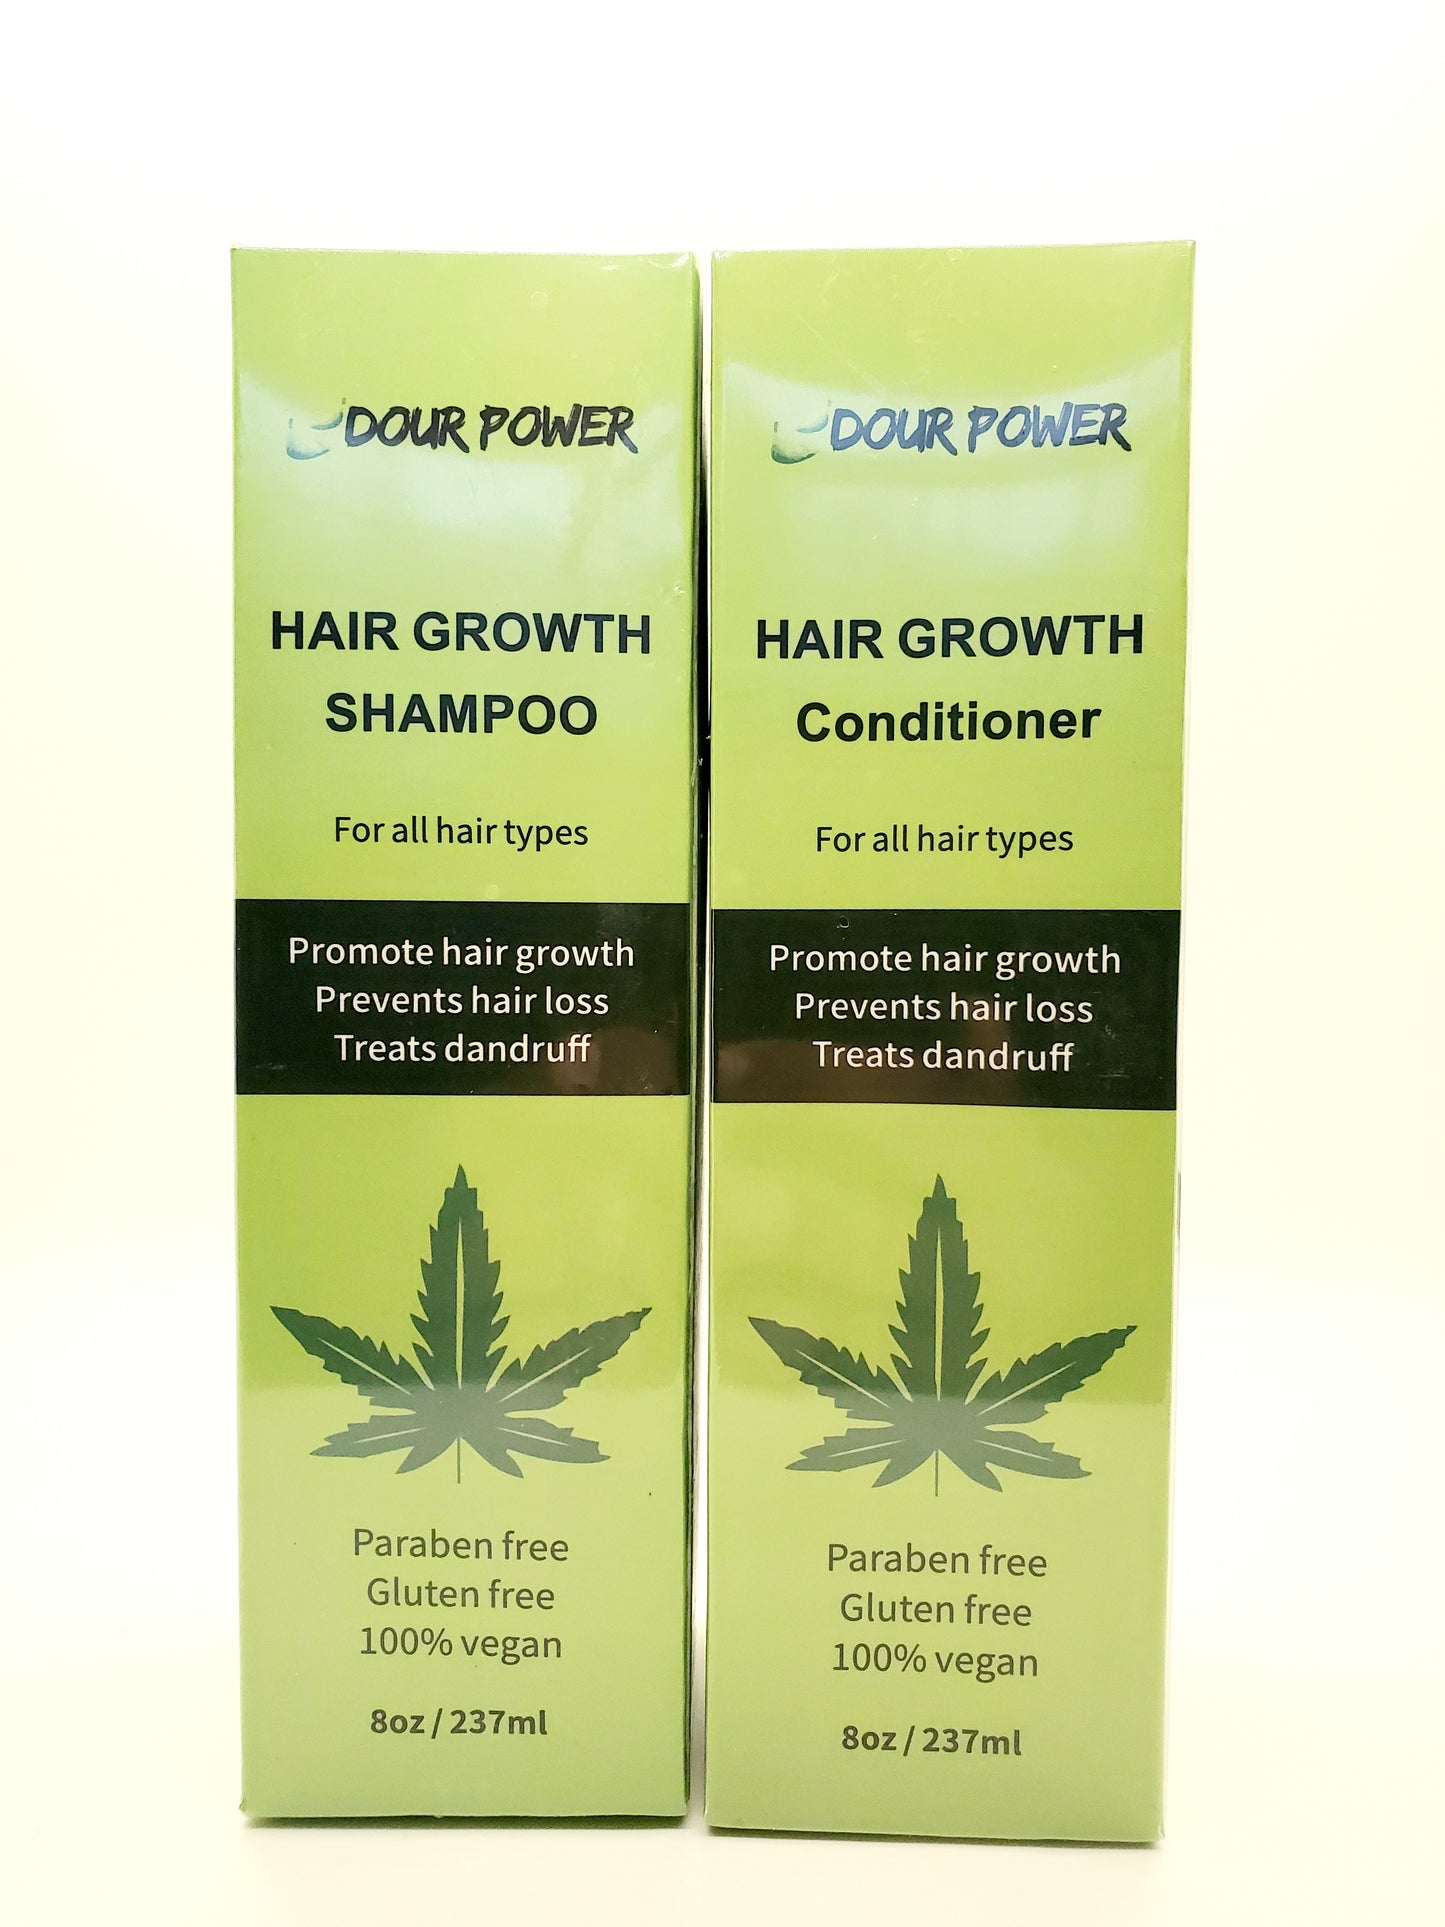 Hair Growth Shampoo and Hair Growth Conditioner